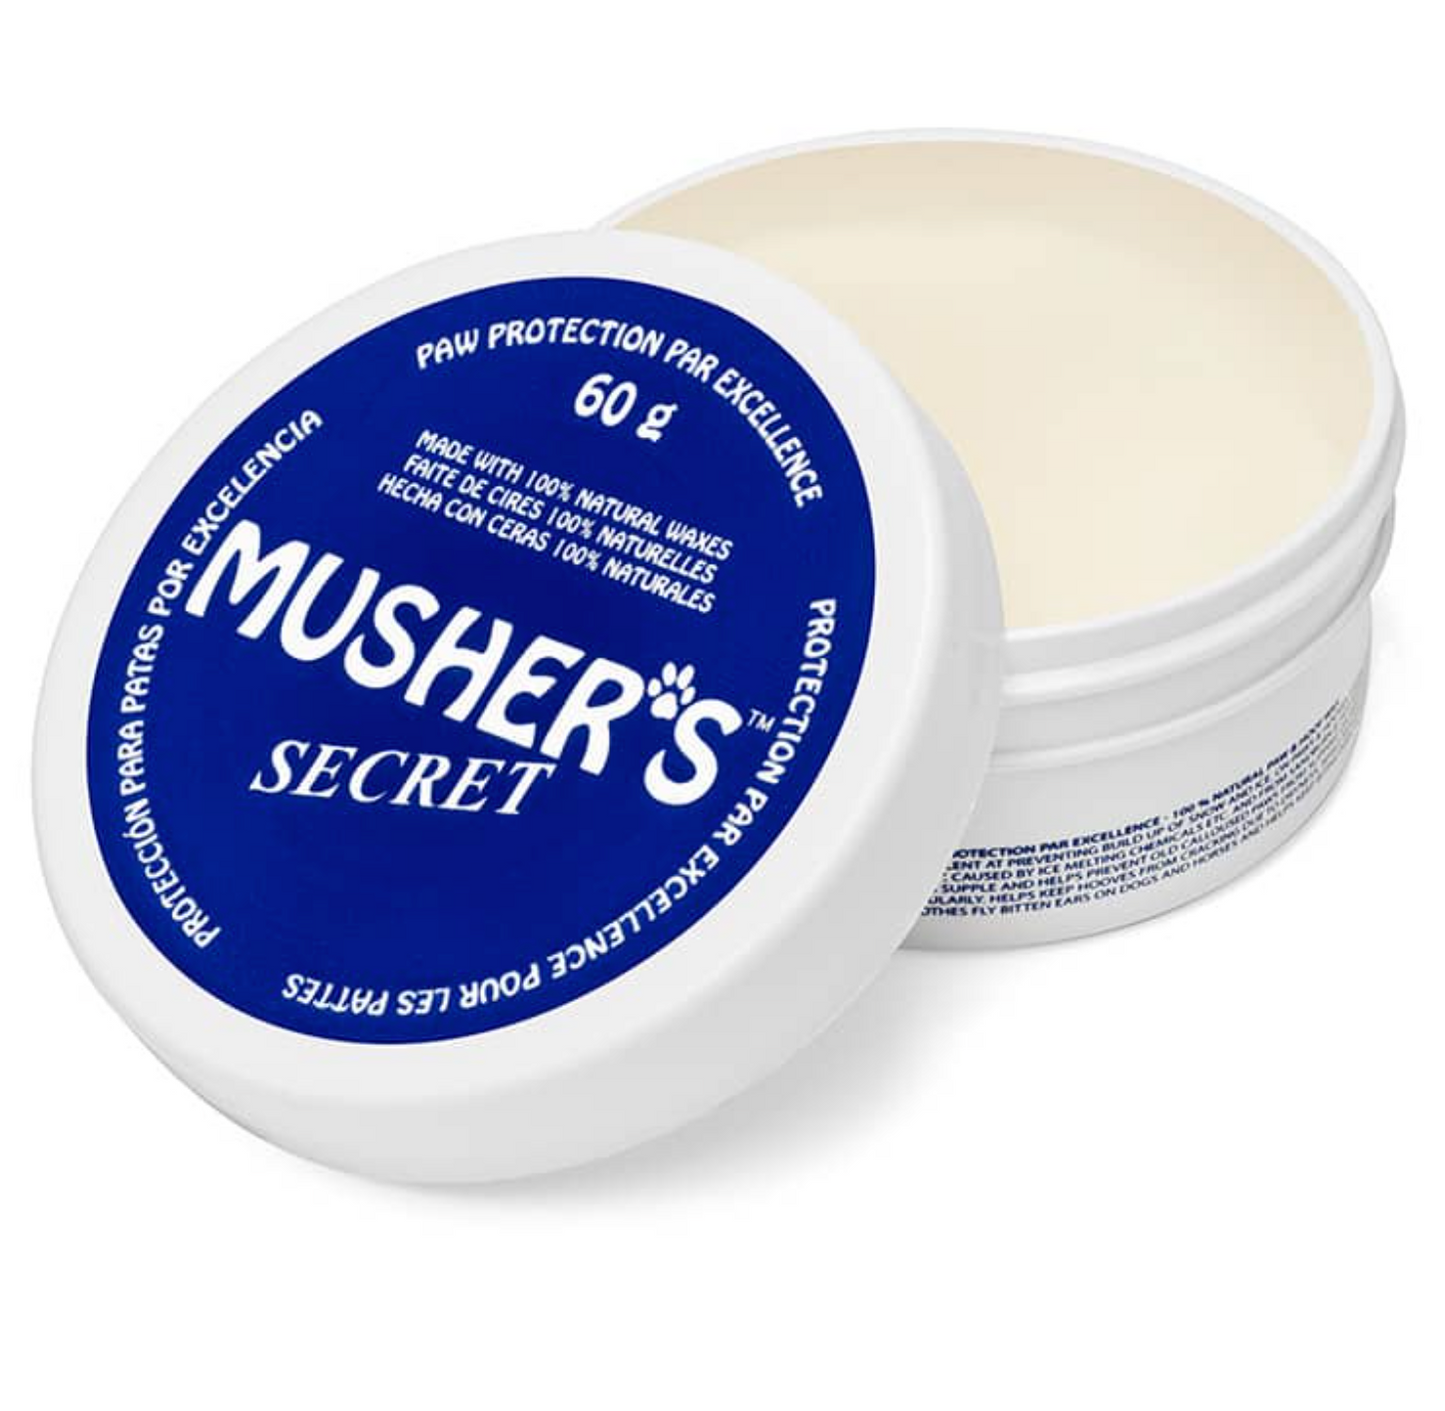 Musher's Secret Balm